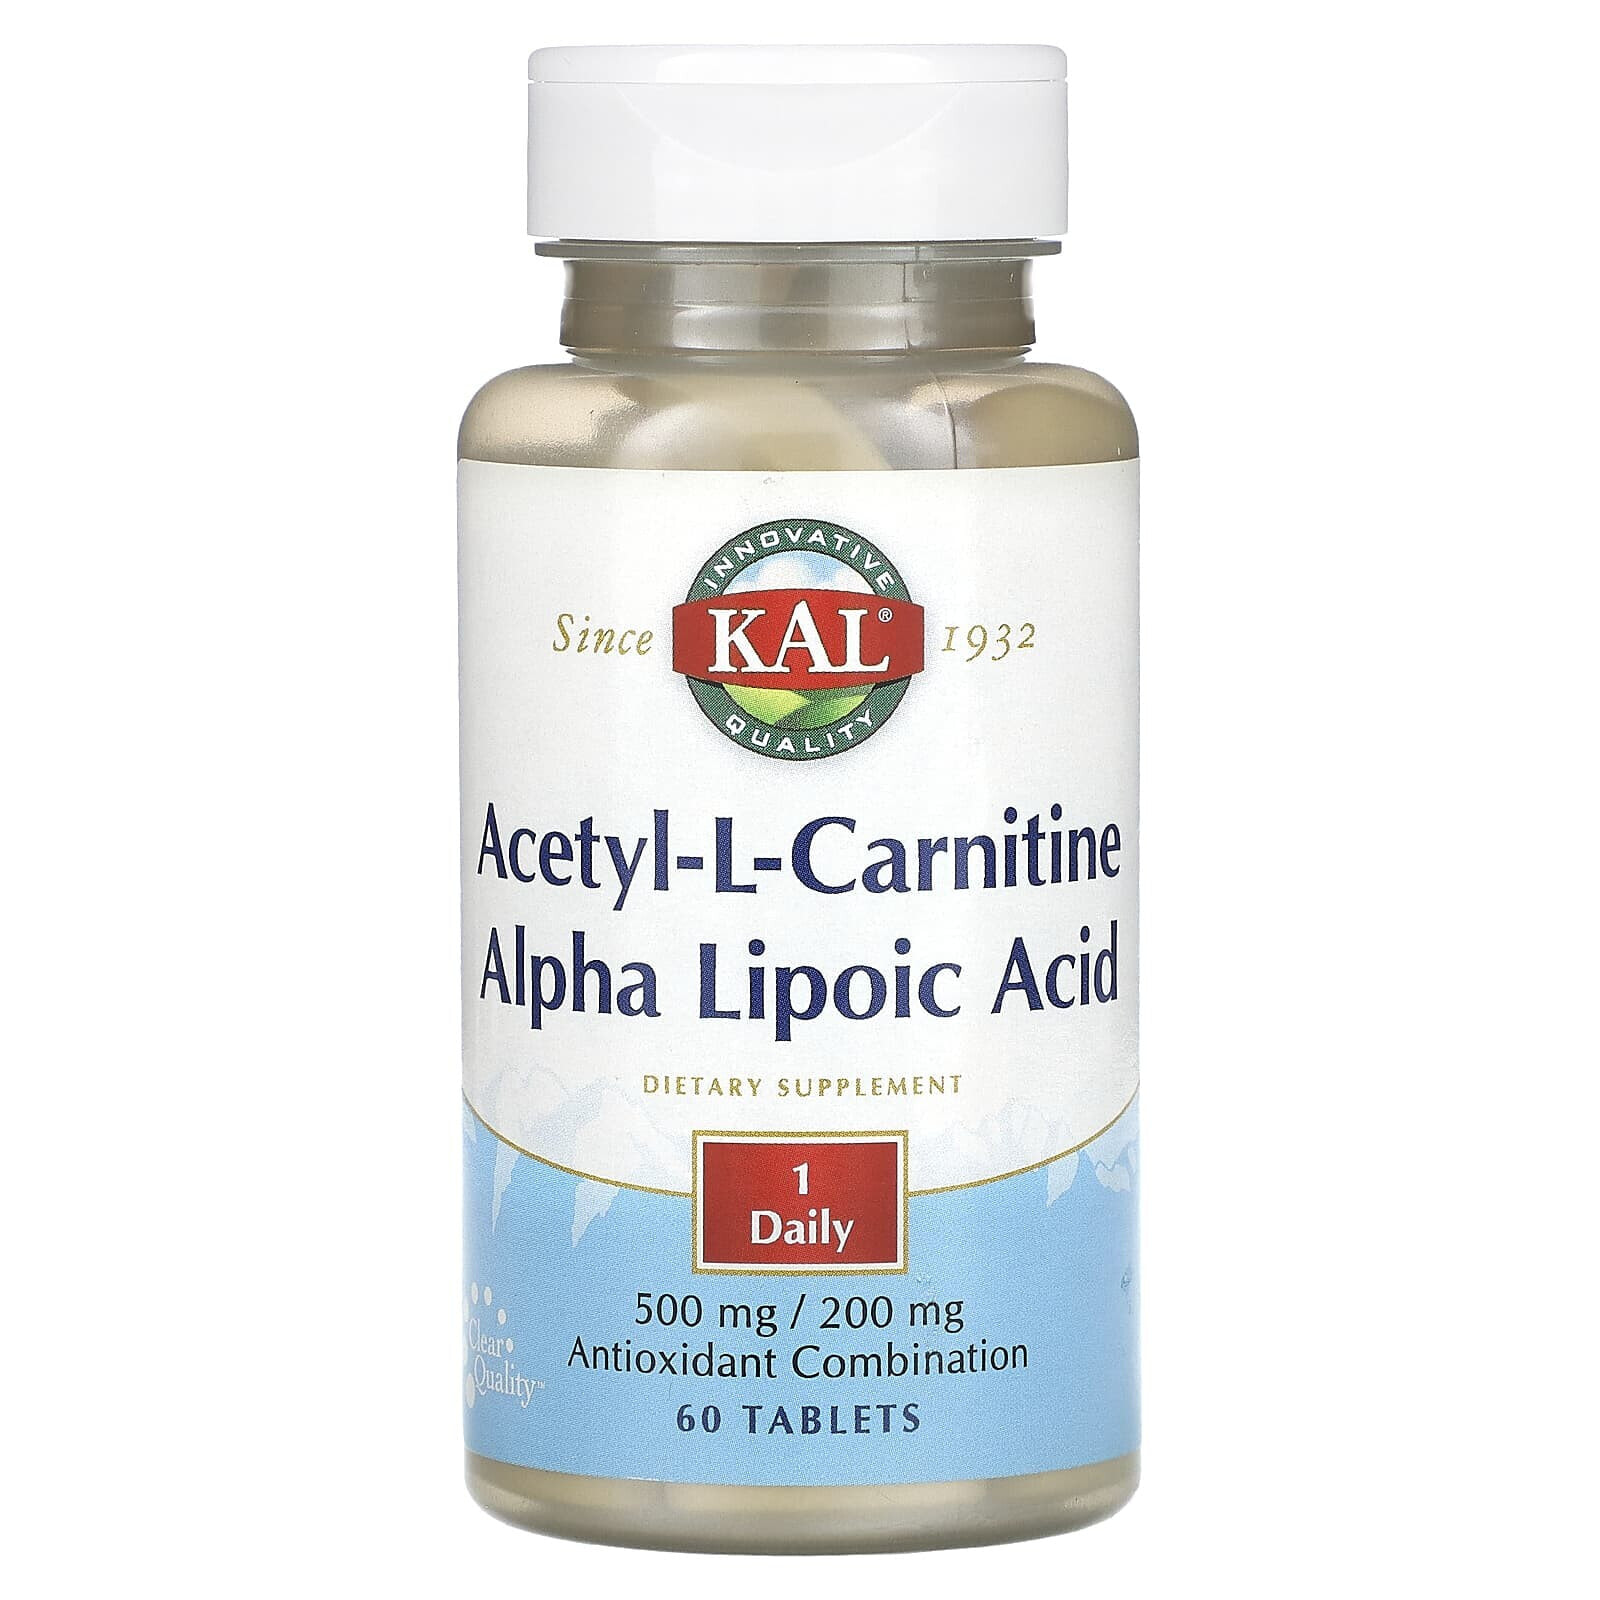 Acetyl-L-Carnitine & Alpha Lipoic Acid, 60 Tablets